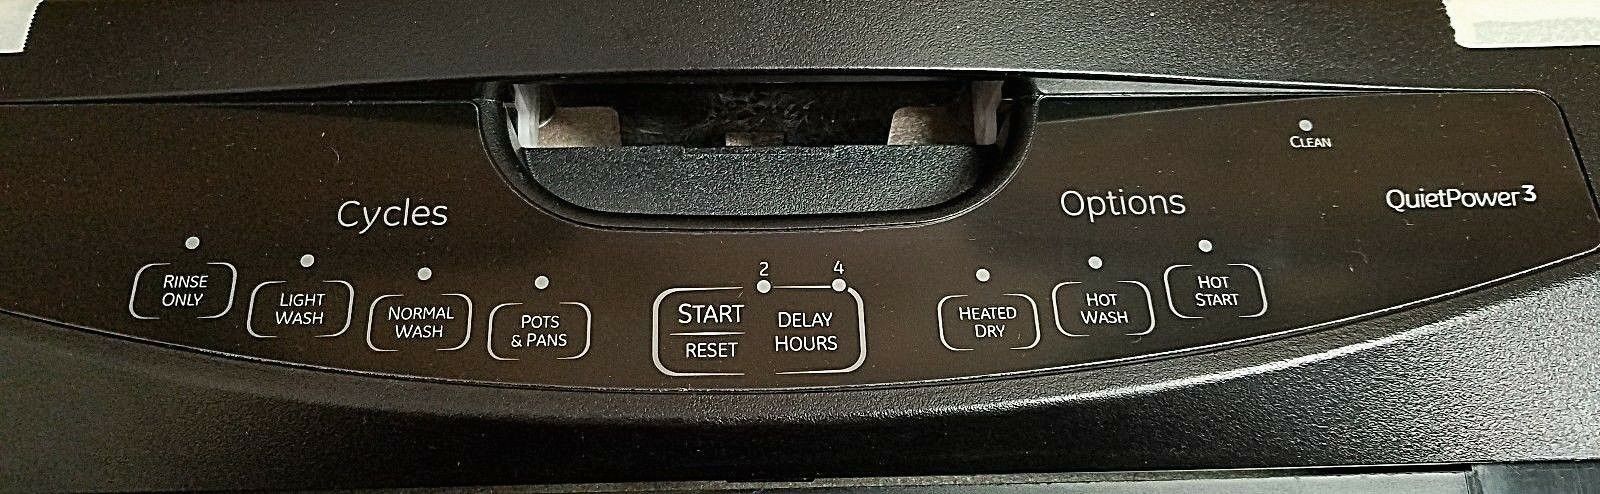 GE Dishwasher Control Panel (New) WD34X11290 (Free Shipping)